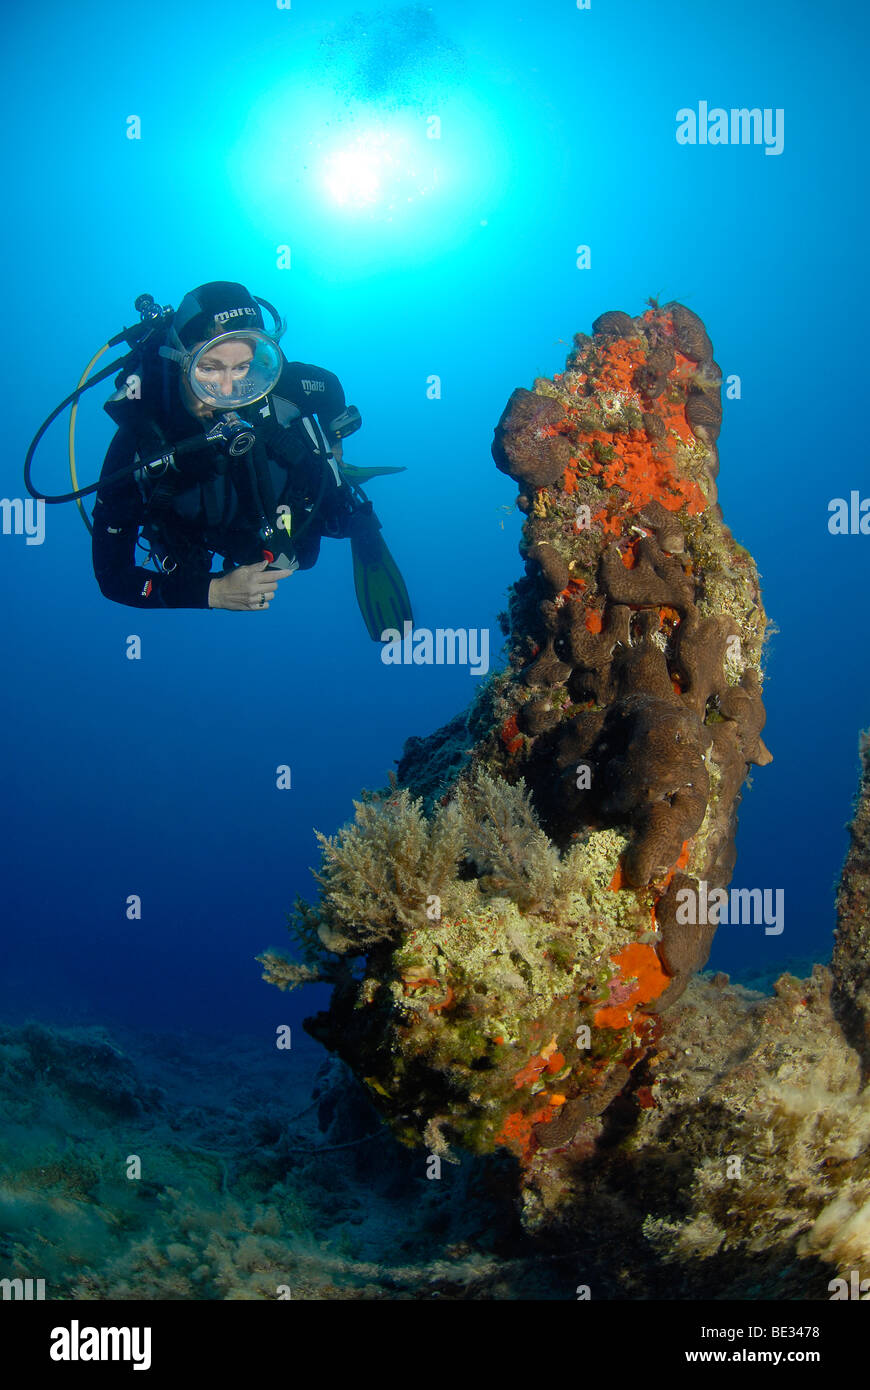 Diver and Rock covered with Corals, Datca Peninsula, Aegaen Sea, Mediterranean Sea, Turkey Stock Photo